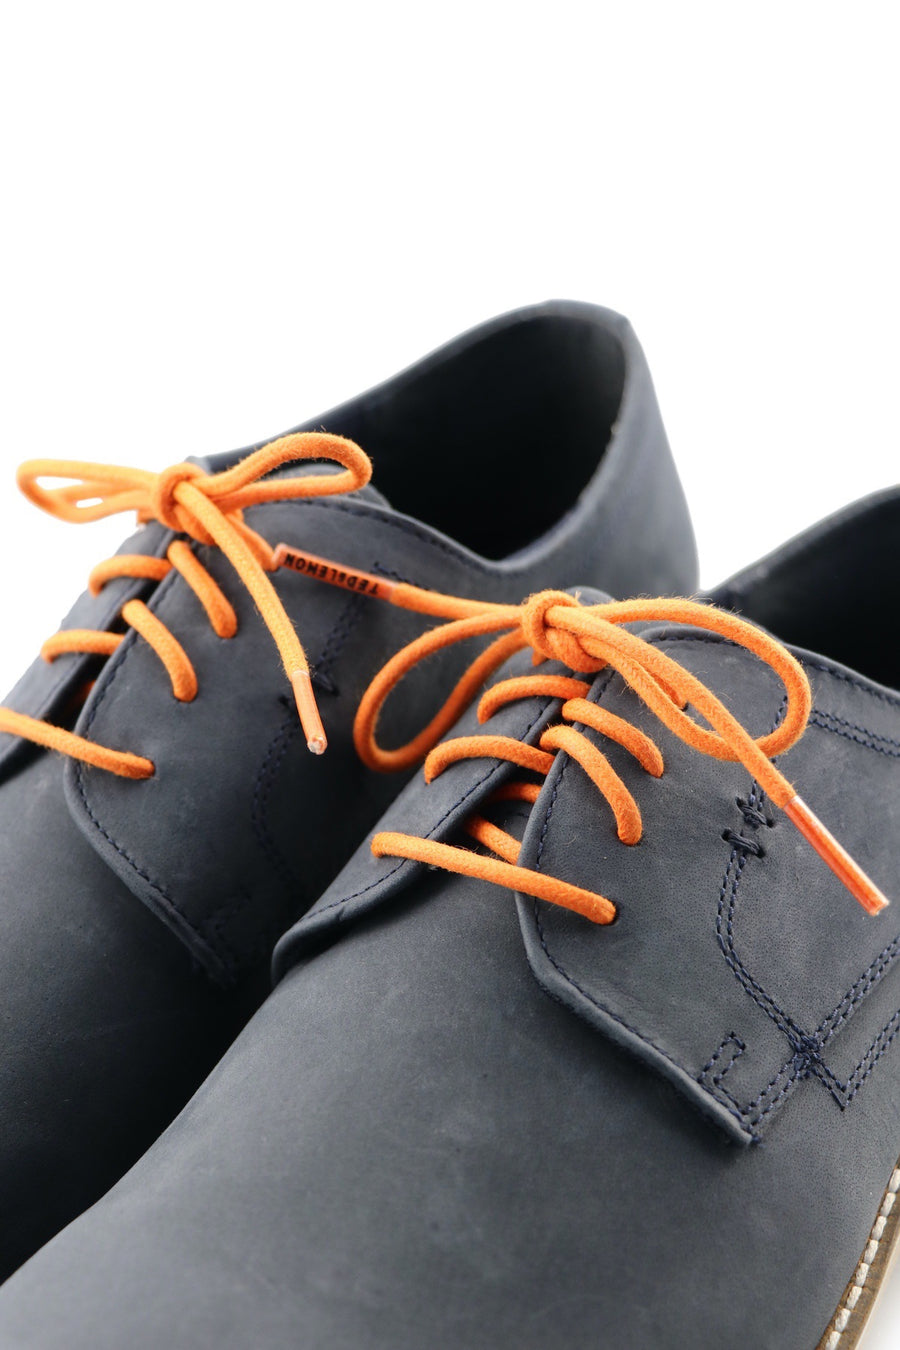 orange shoe laces tangello